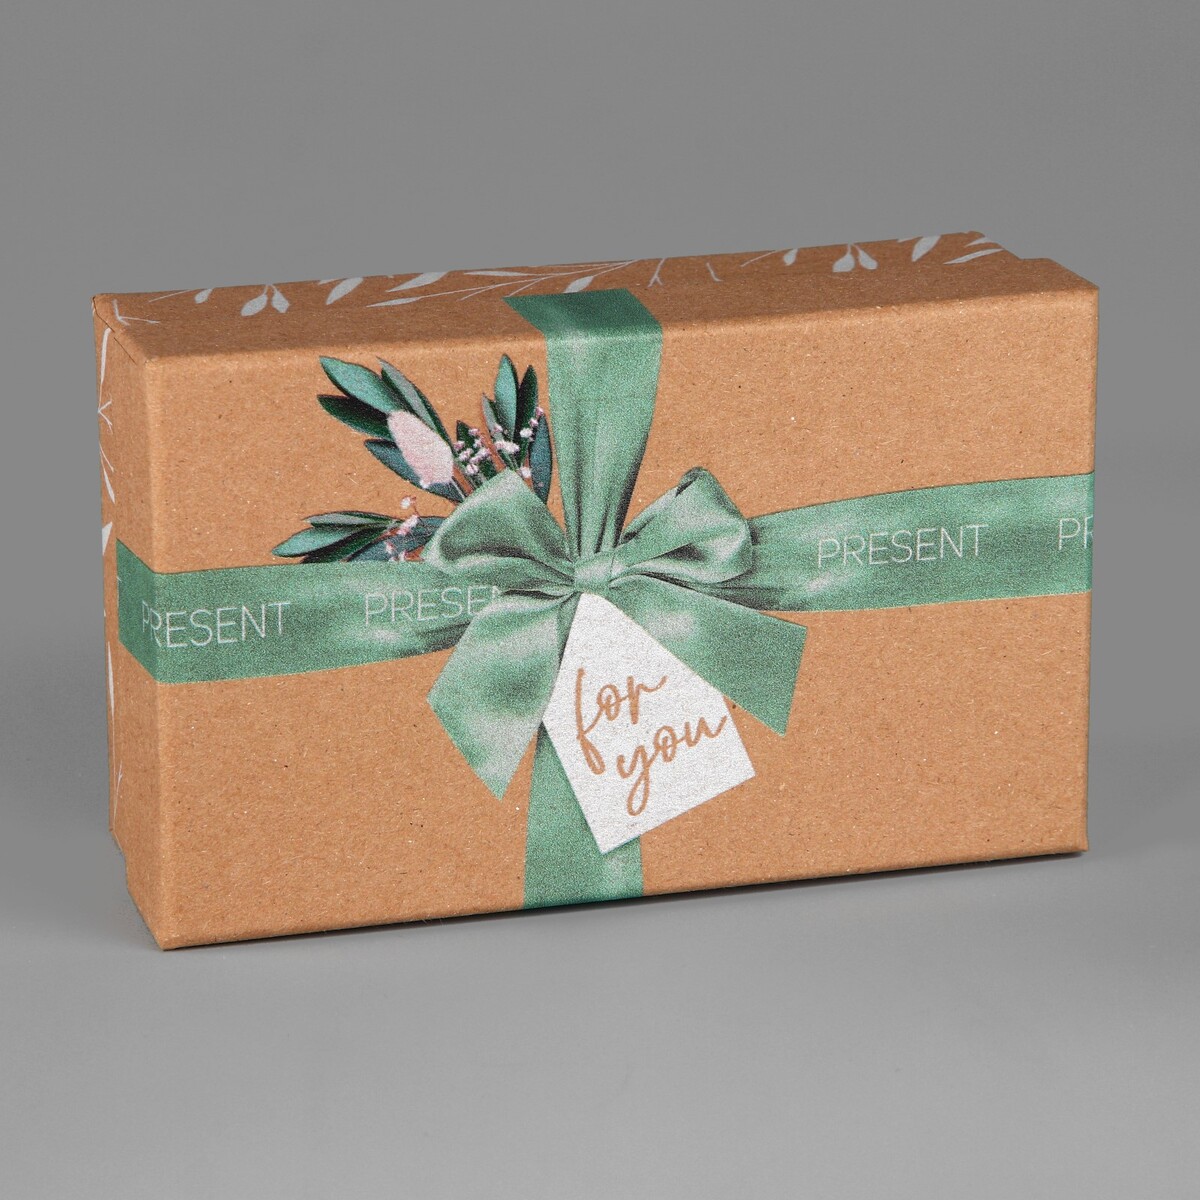 Коробка подарочная прямоугольная, упаковка, present for you, 14 х 8.5 х 4.5 см